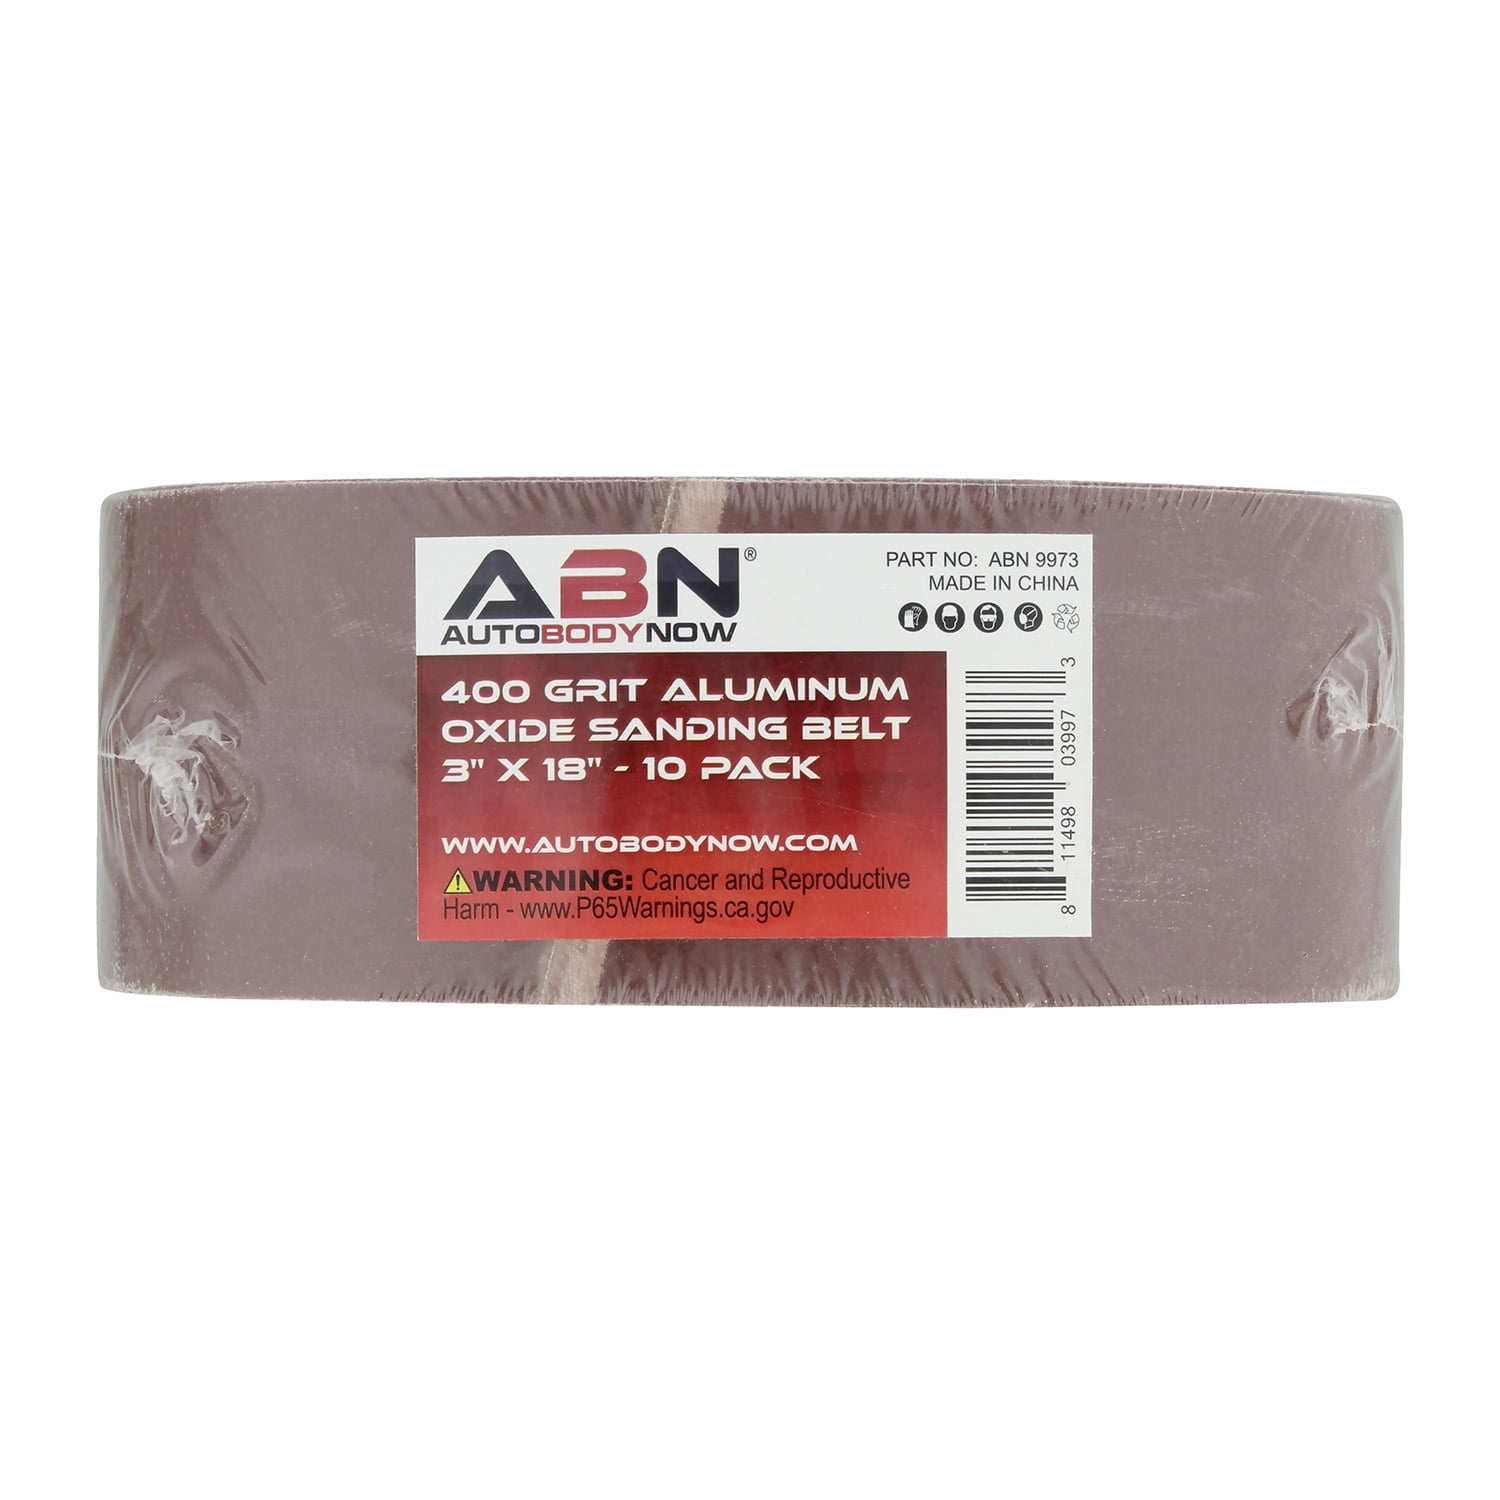 10 Pack 3" x 18" 400 Grit Aluminum Oxide Sanding Belt Kit Metal & Wood FINE 